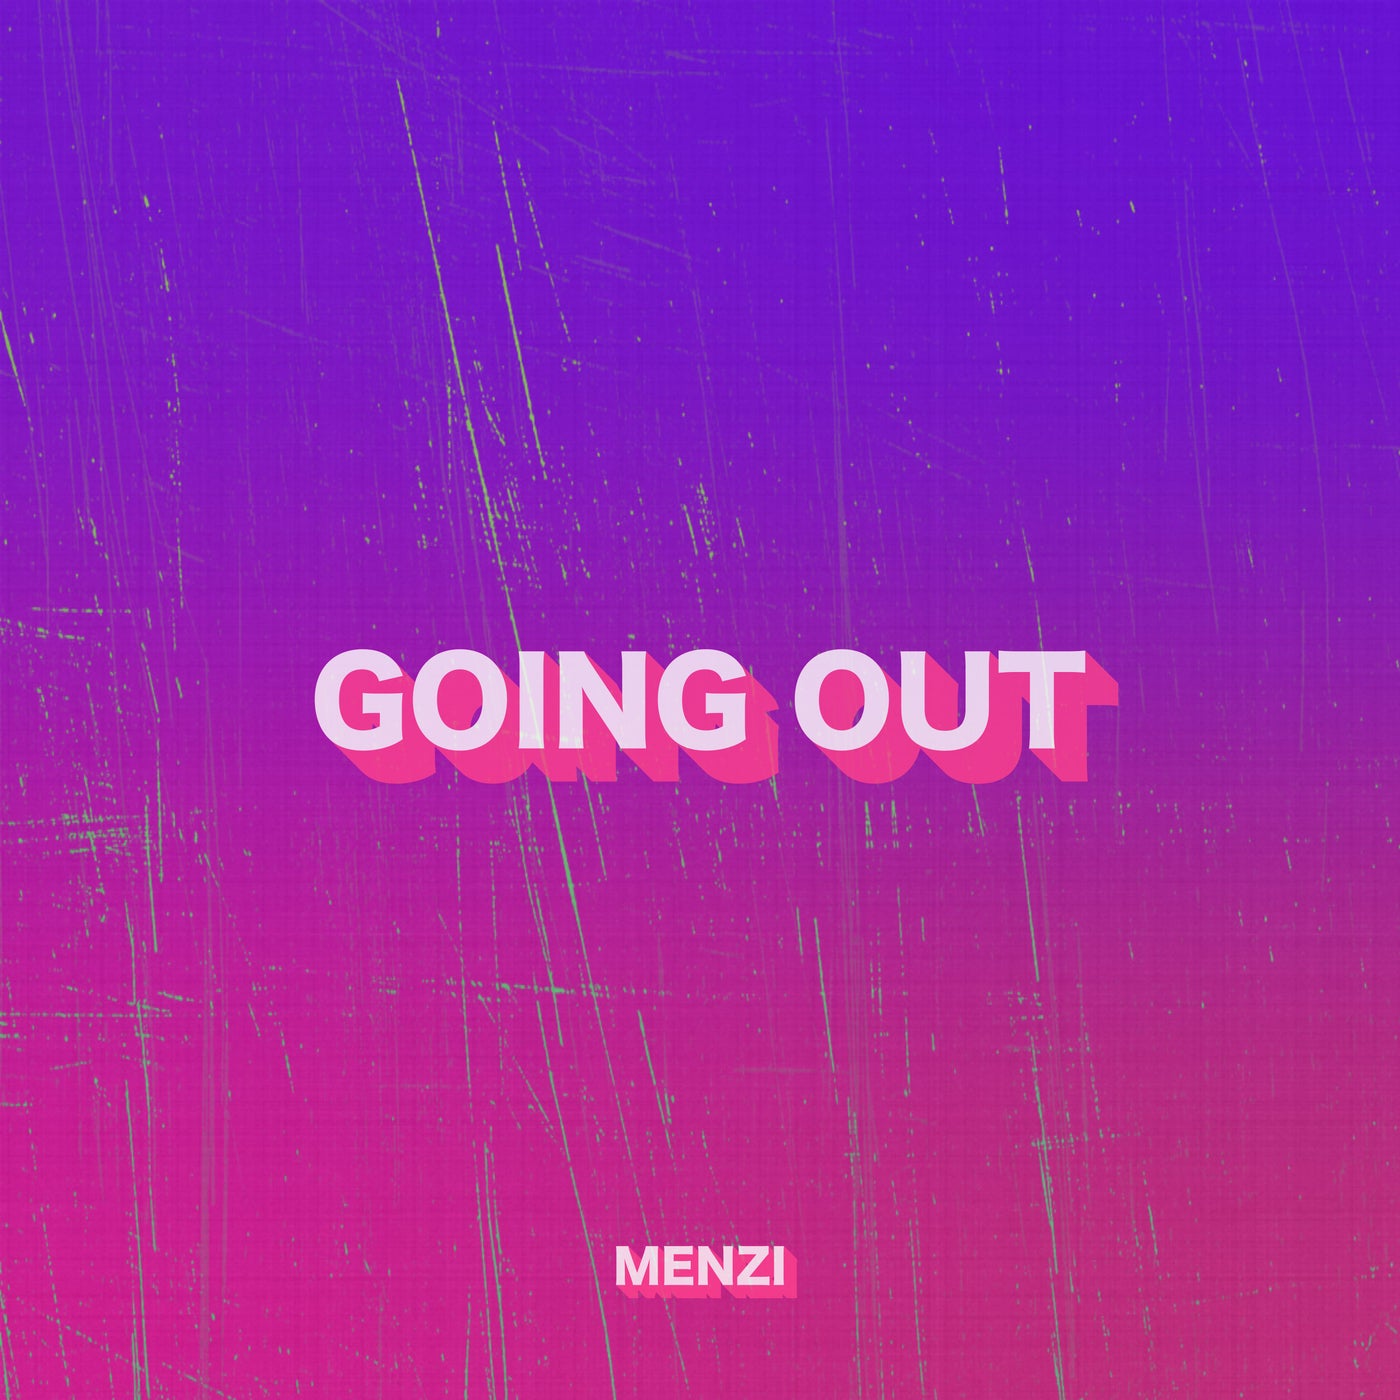 Menzi music download - Beatport